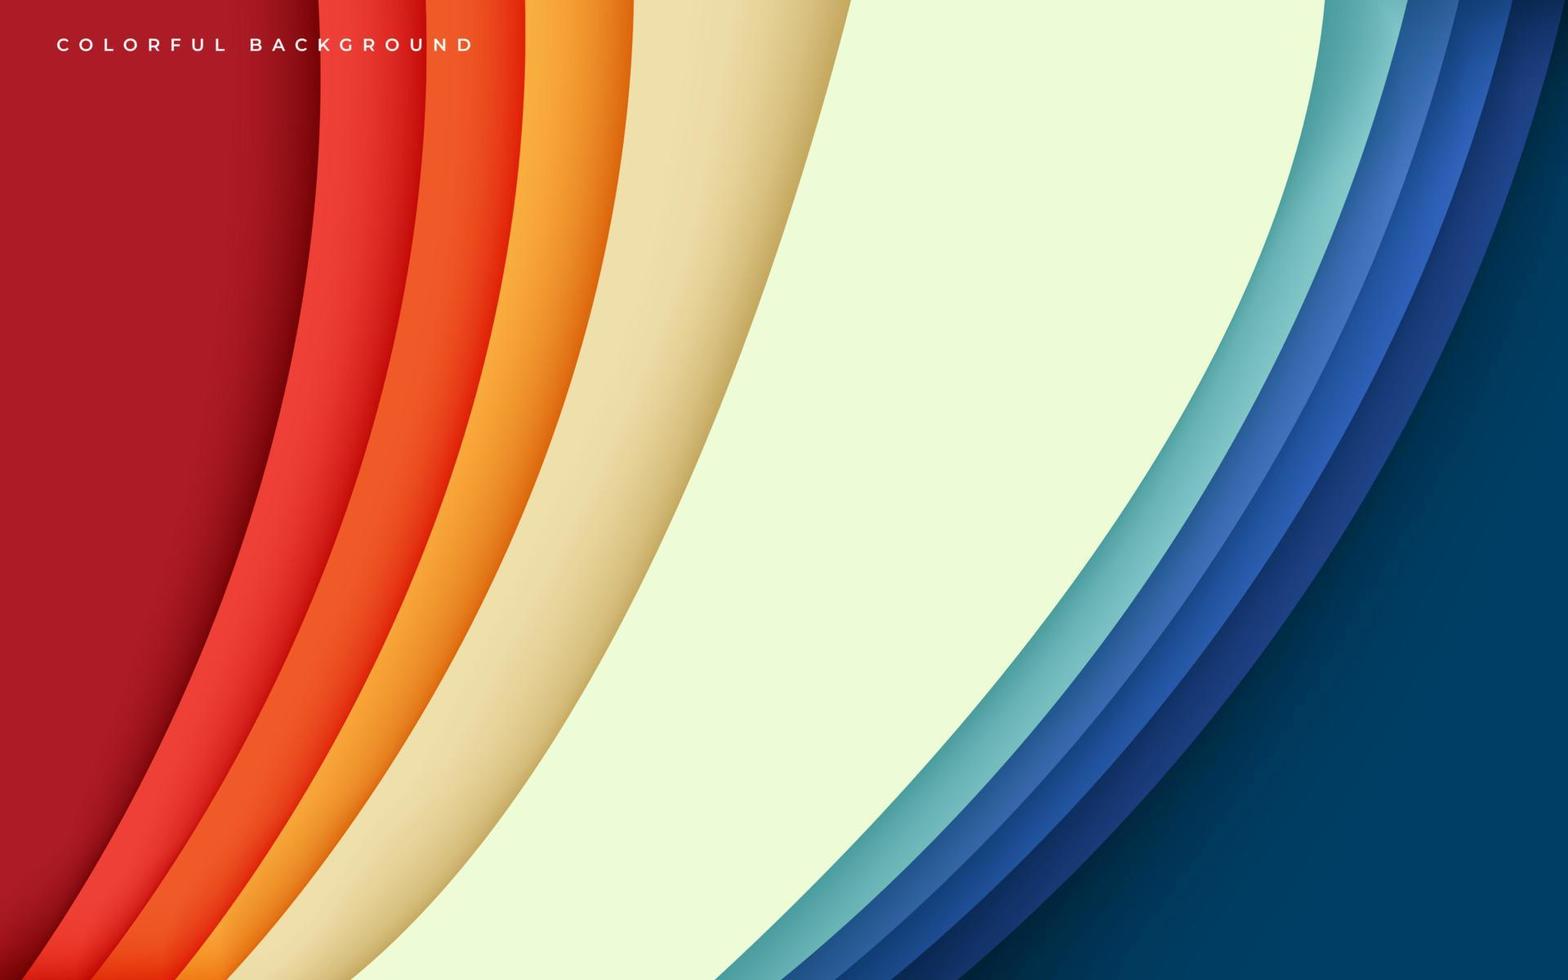 capas de corte de papel 3d de textura colorida de múltiples capas en banner de vector degradado. diseño de fondo de arte de corte de papel abstracto para plantilla de sitio web. concepto de mapa topográfico o corte de papel de origami suave